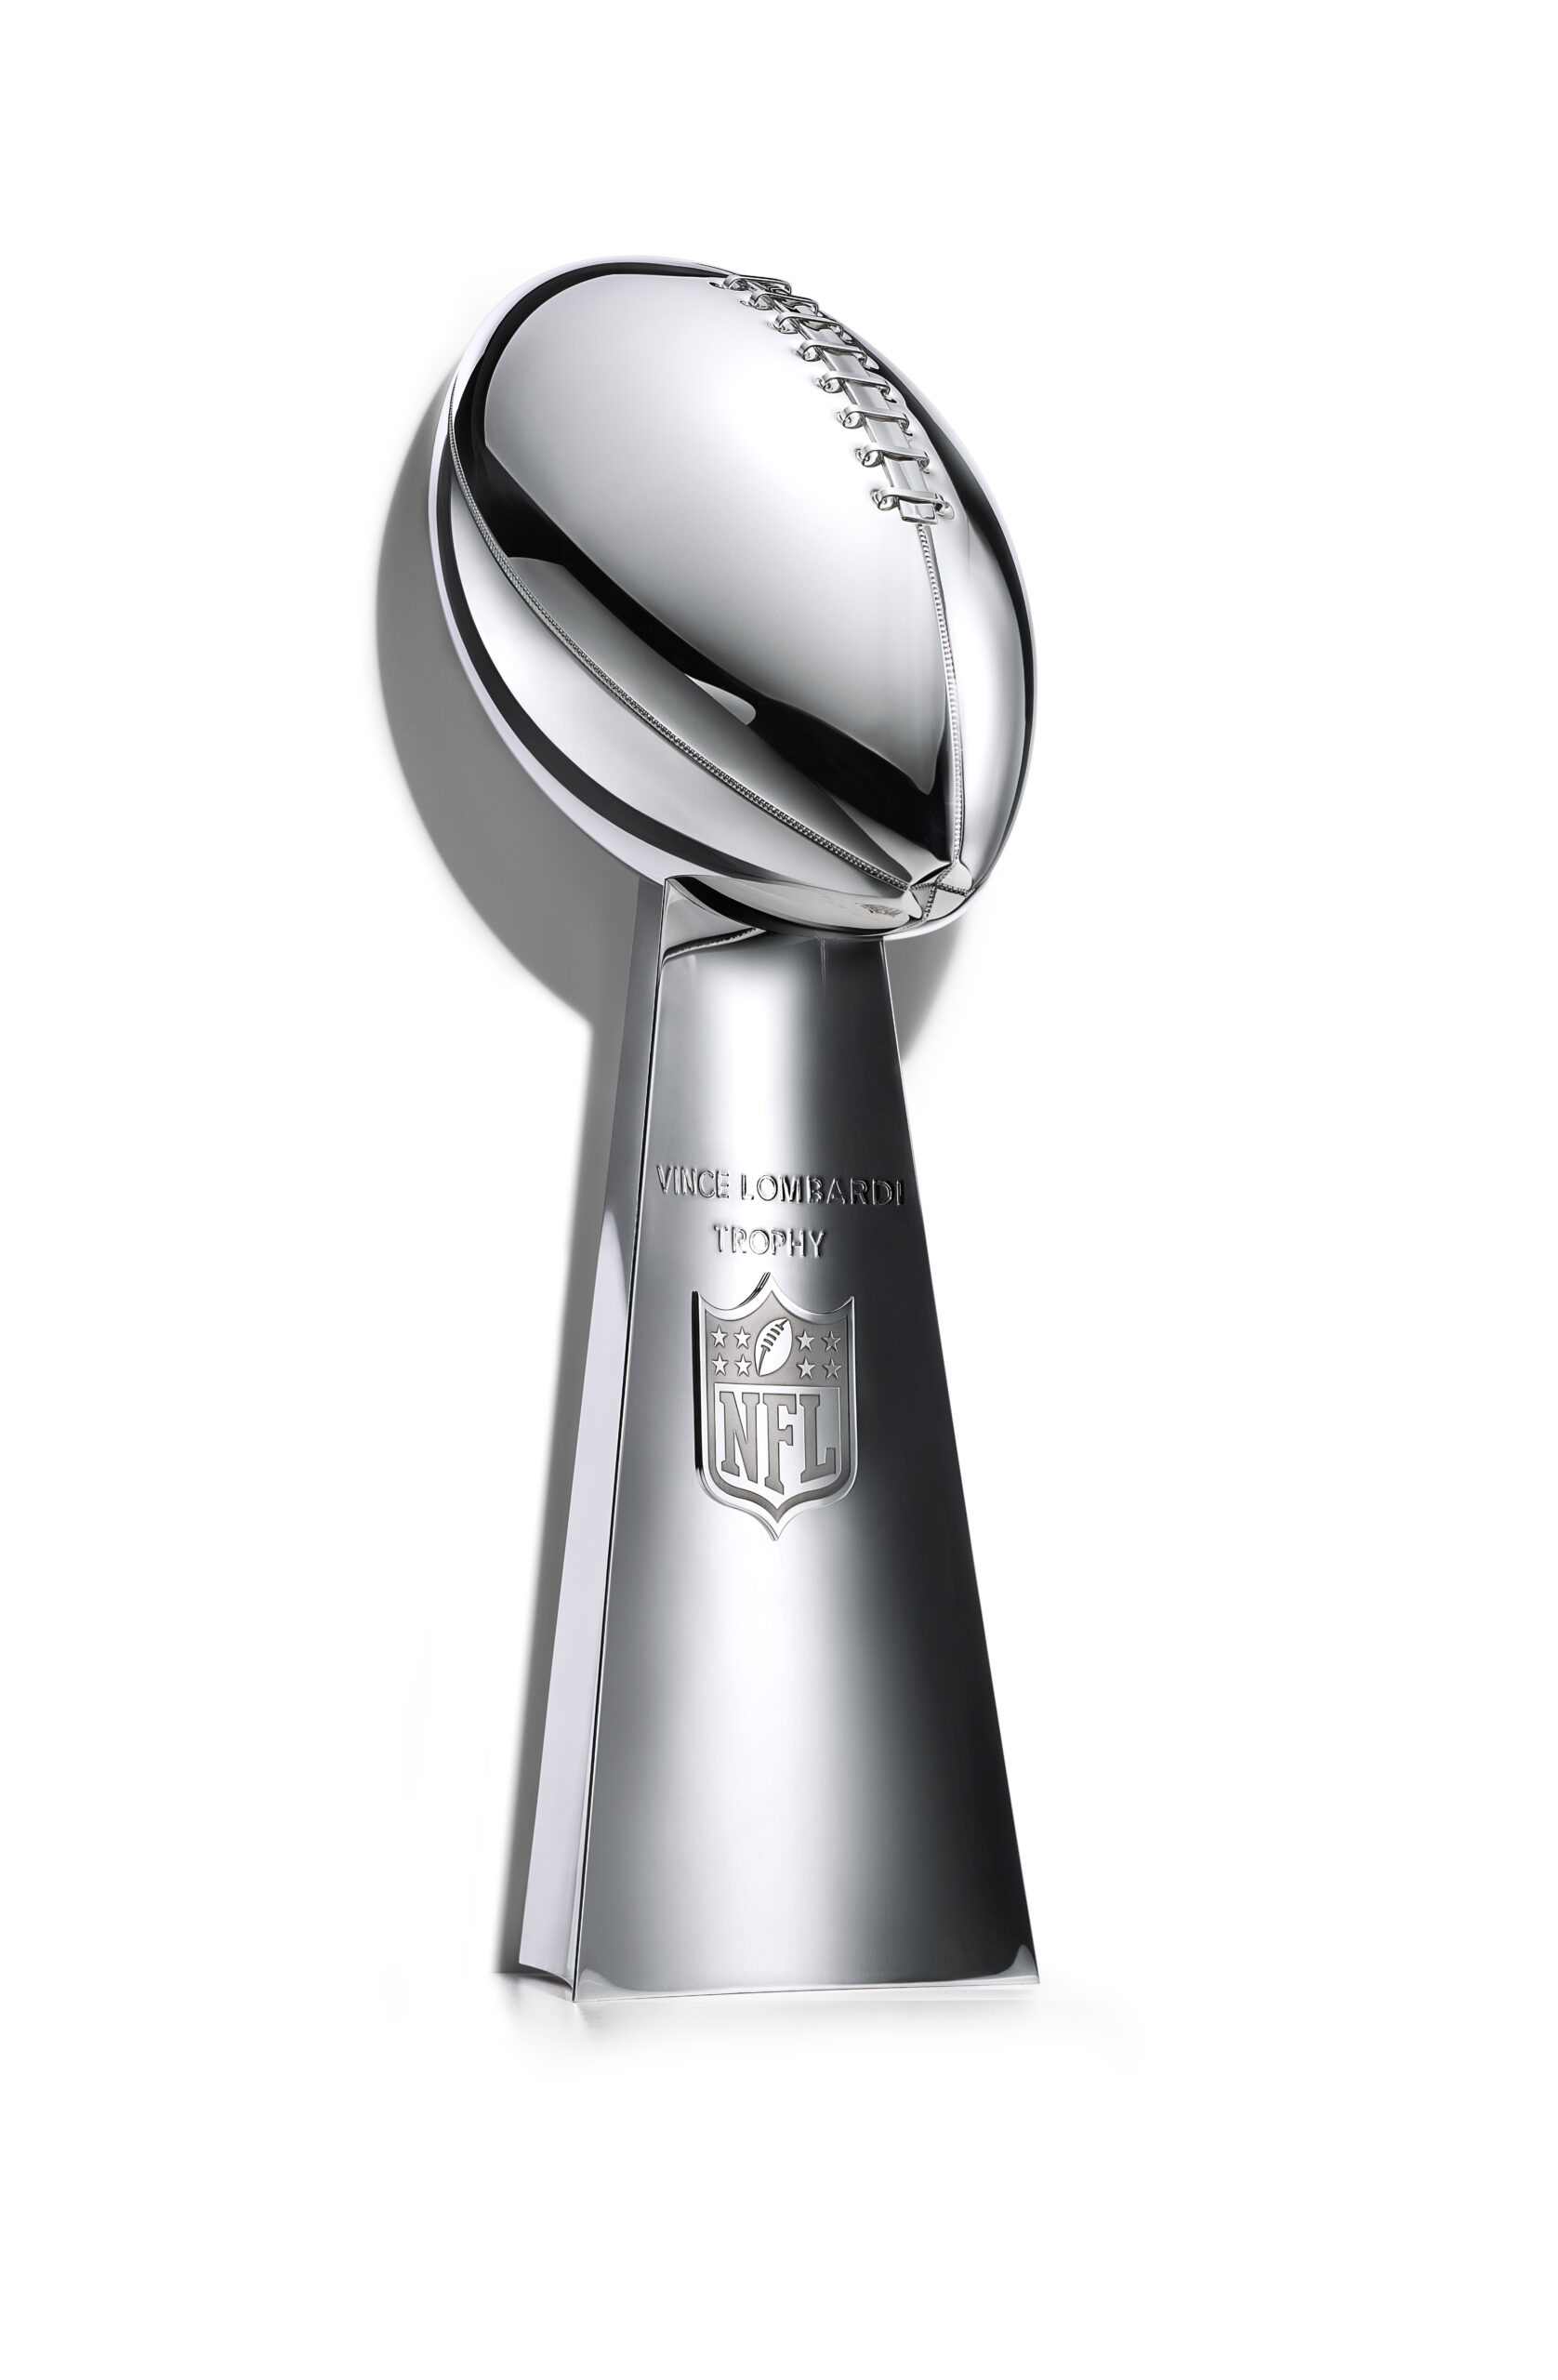 Tiffany & Co. artífices del Trofeo Vince Lombardi del Super Bowl LVIII